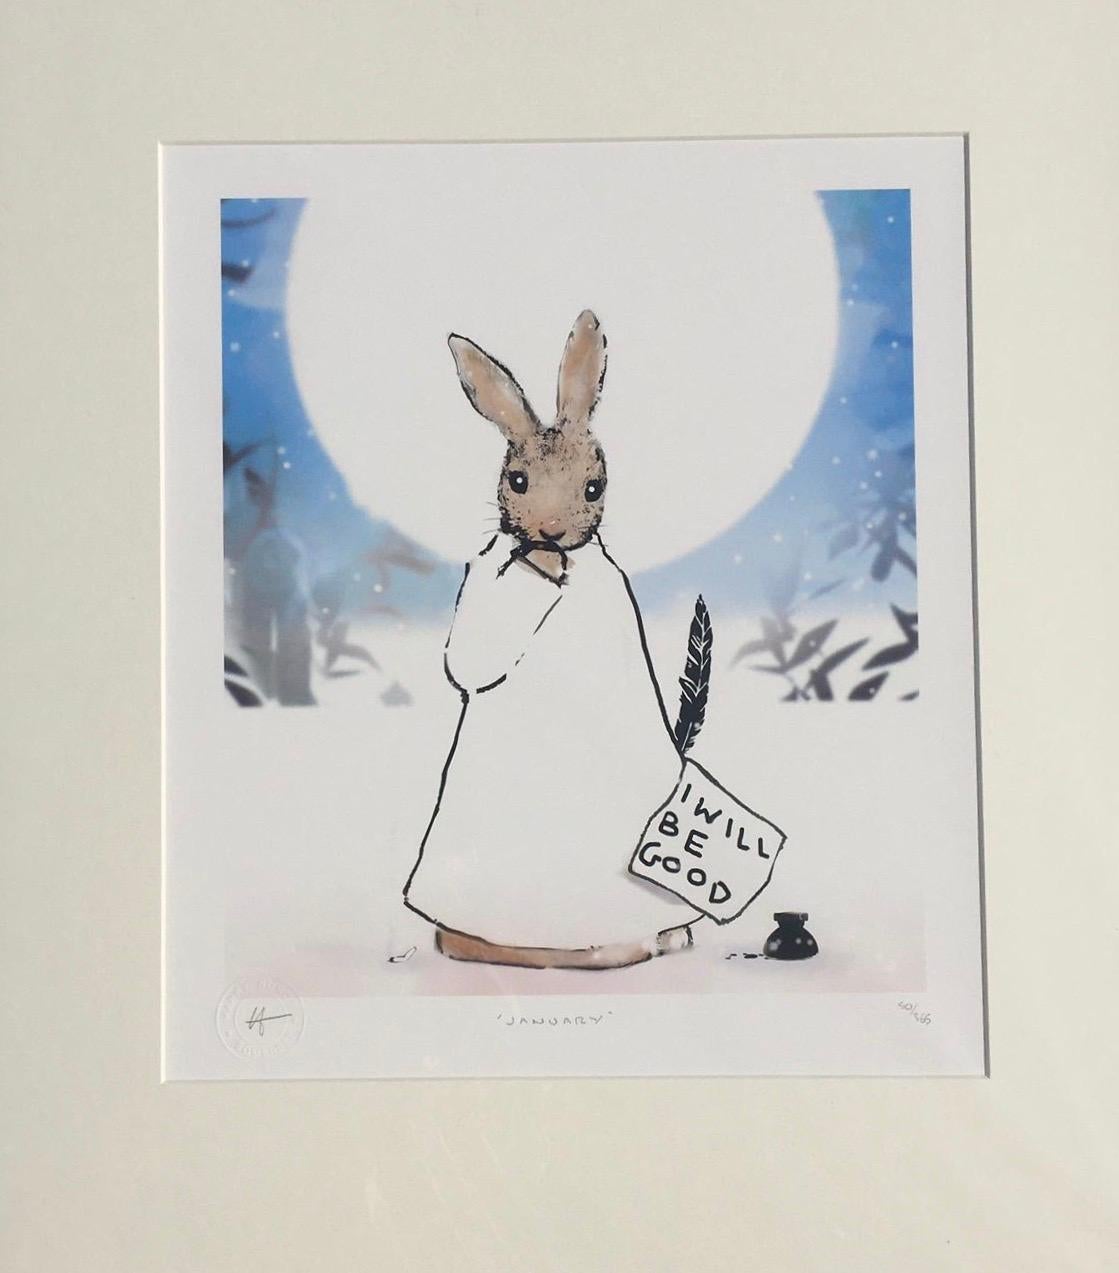 En janvier, The Happy Year, Harry Bunce, Art animalier, tirage limité en vente 1